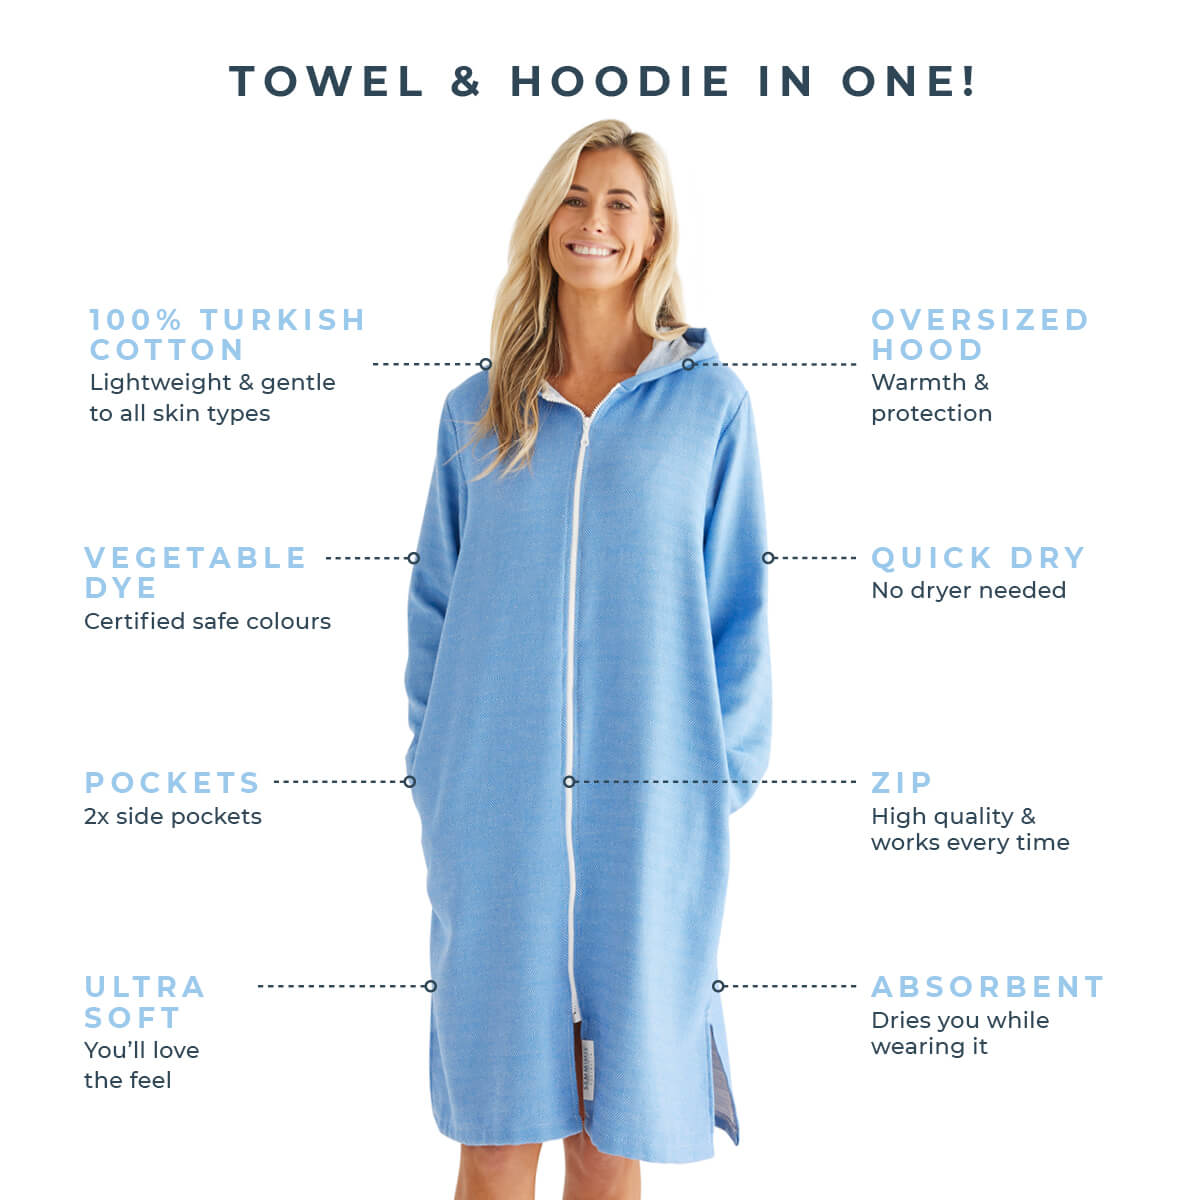 LA PELOSA Adult Hooded Towel Infographic